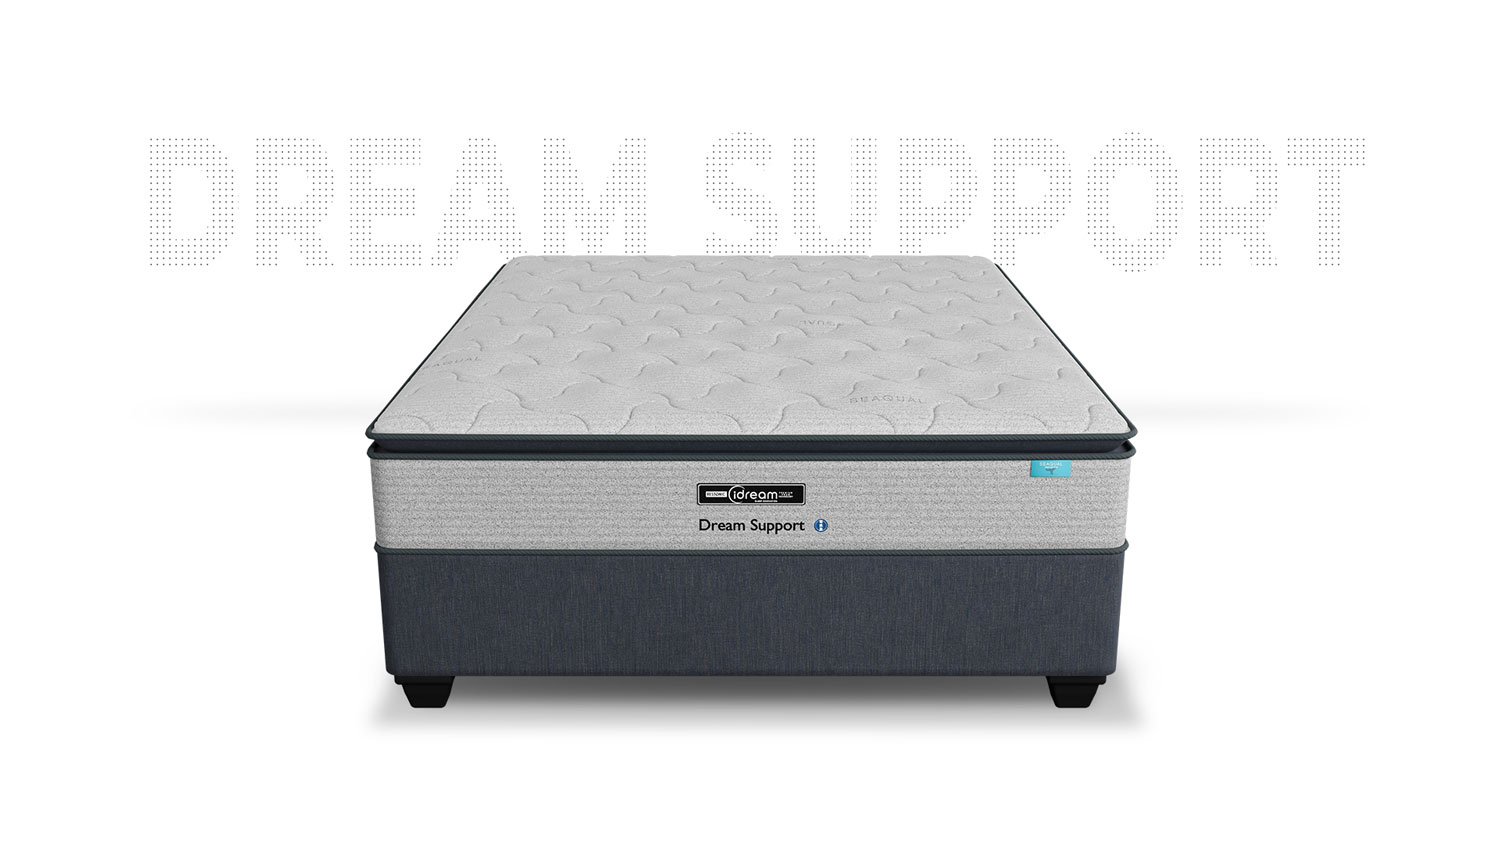 iDream Dream Support Bed Header Title